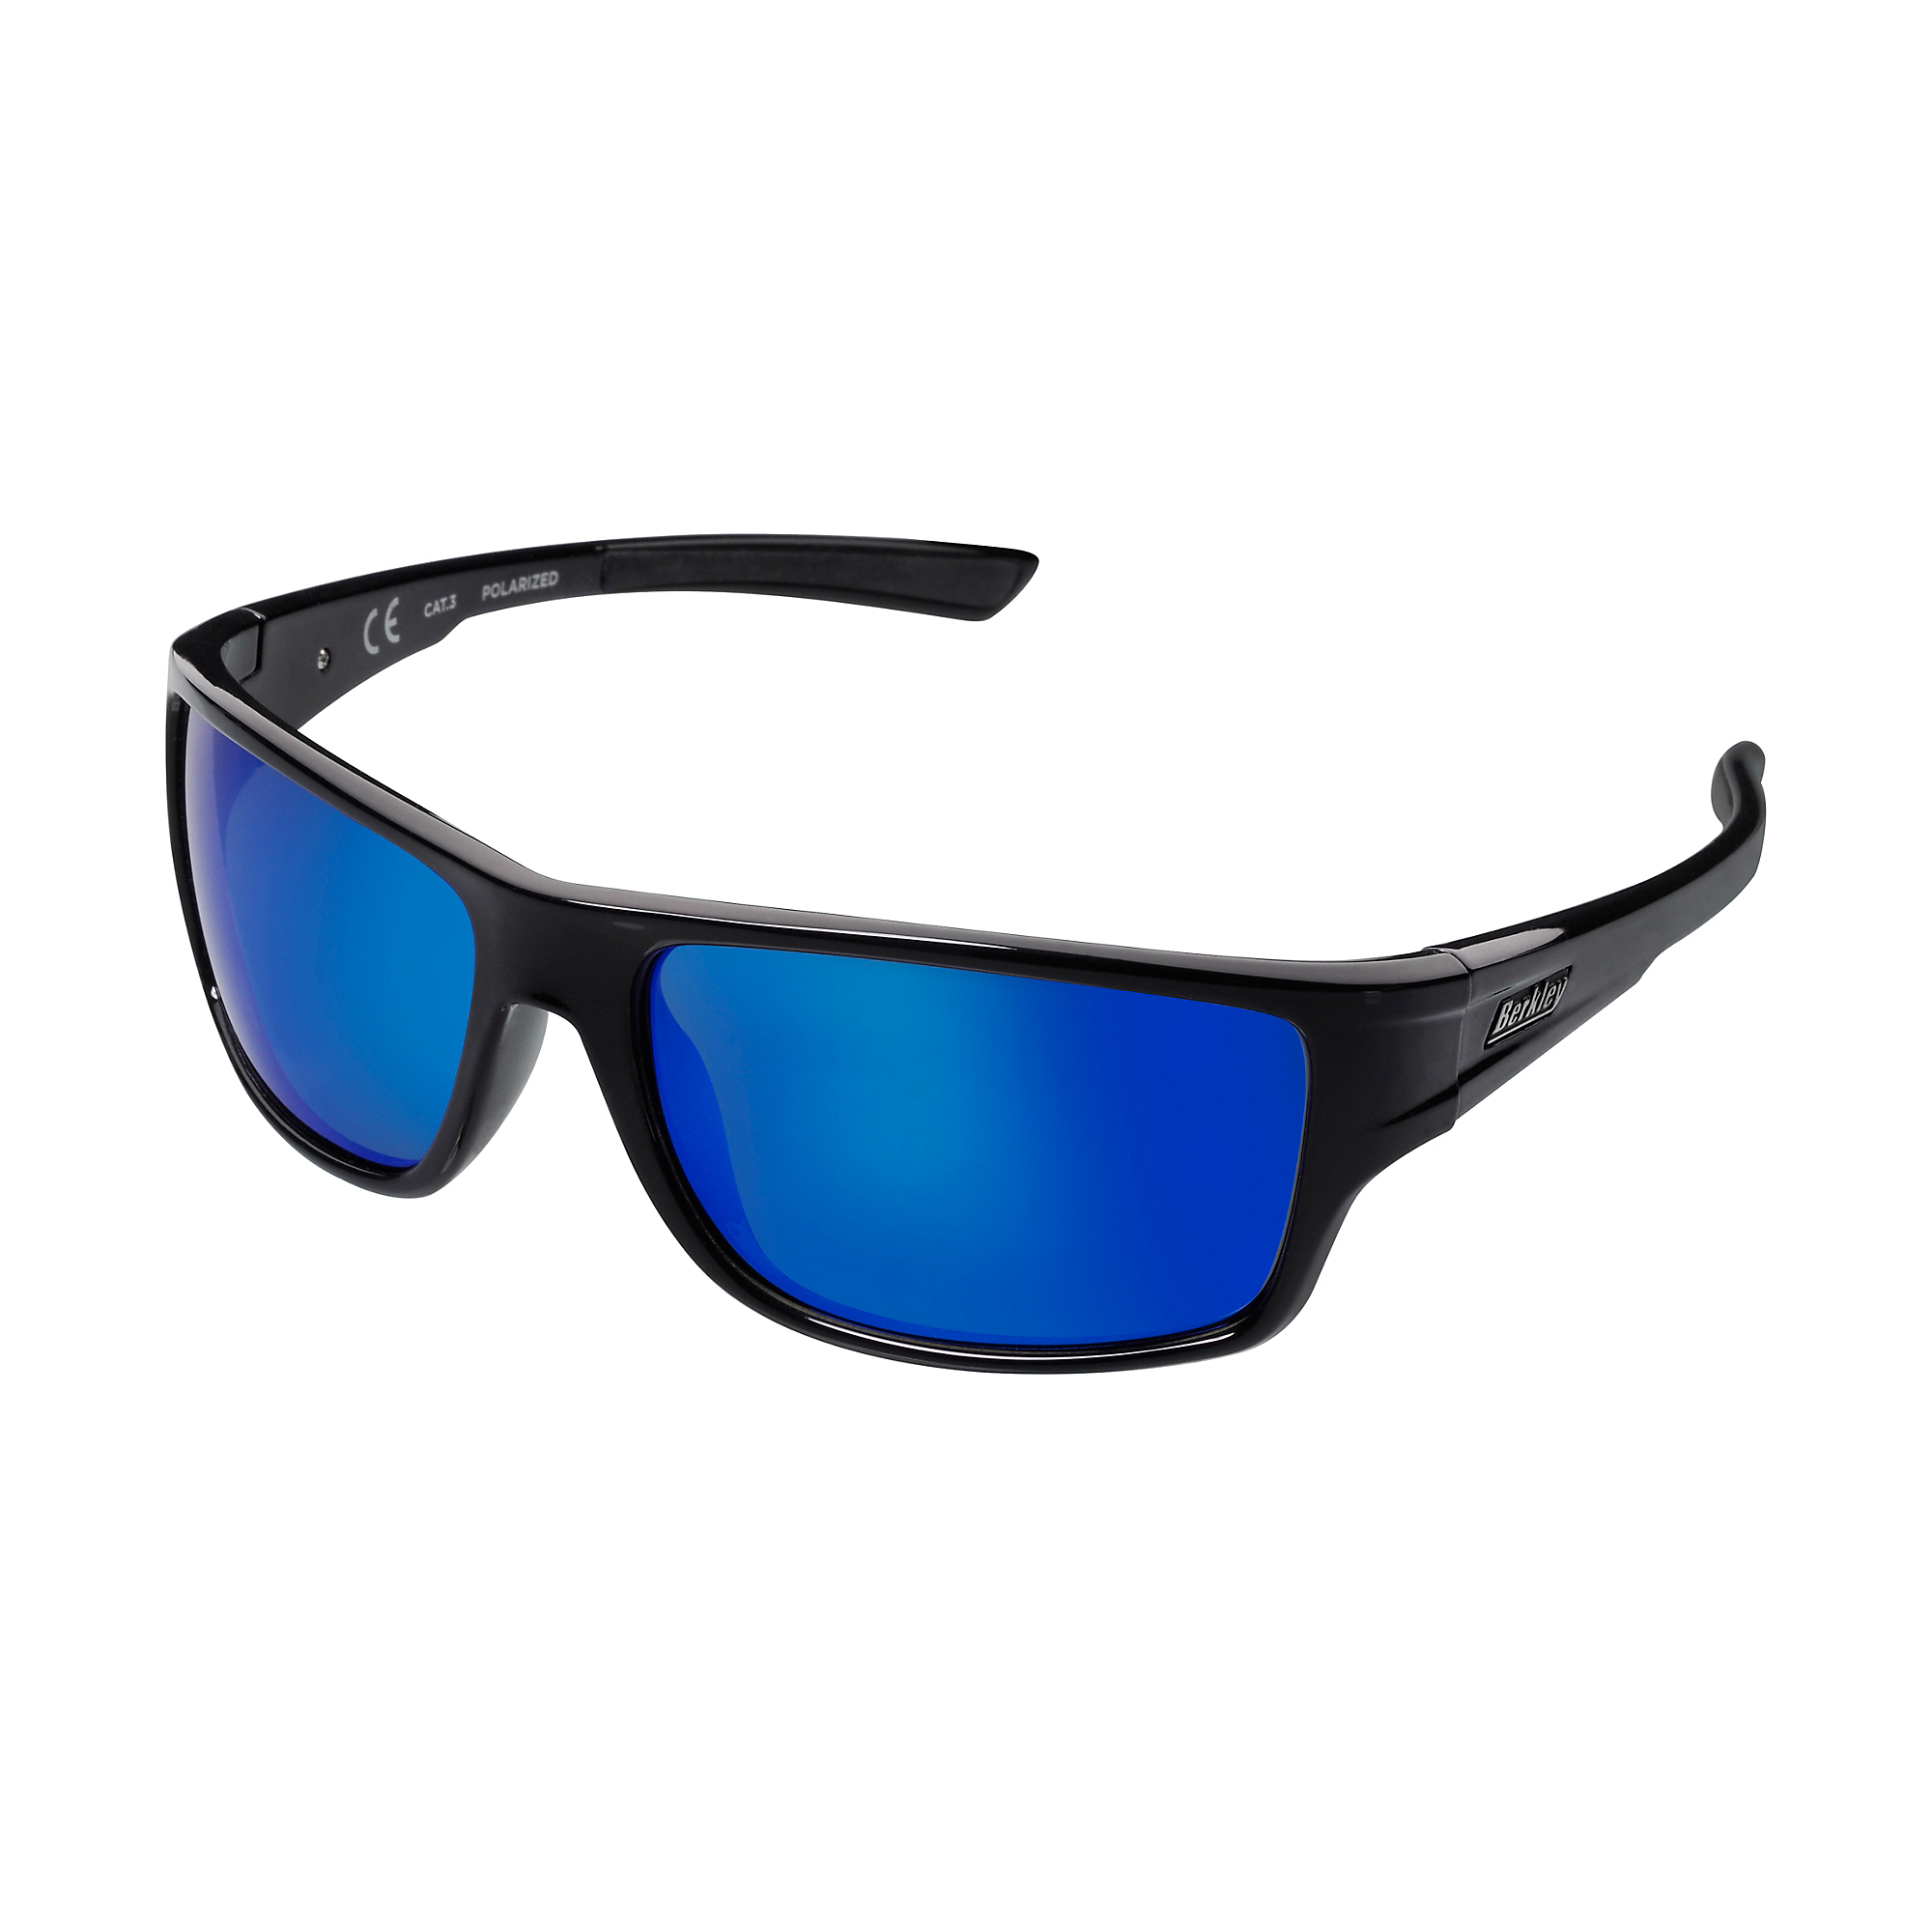 Berkley B11 Sunglasses - Black / Grey / Blue Revo